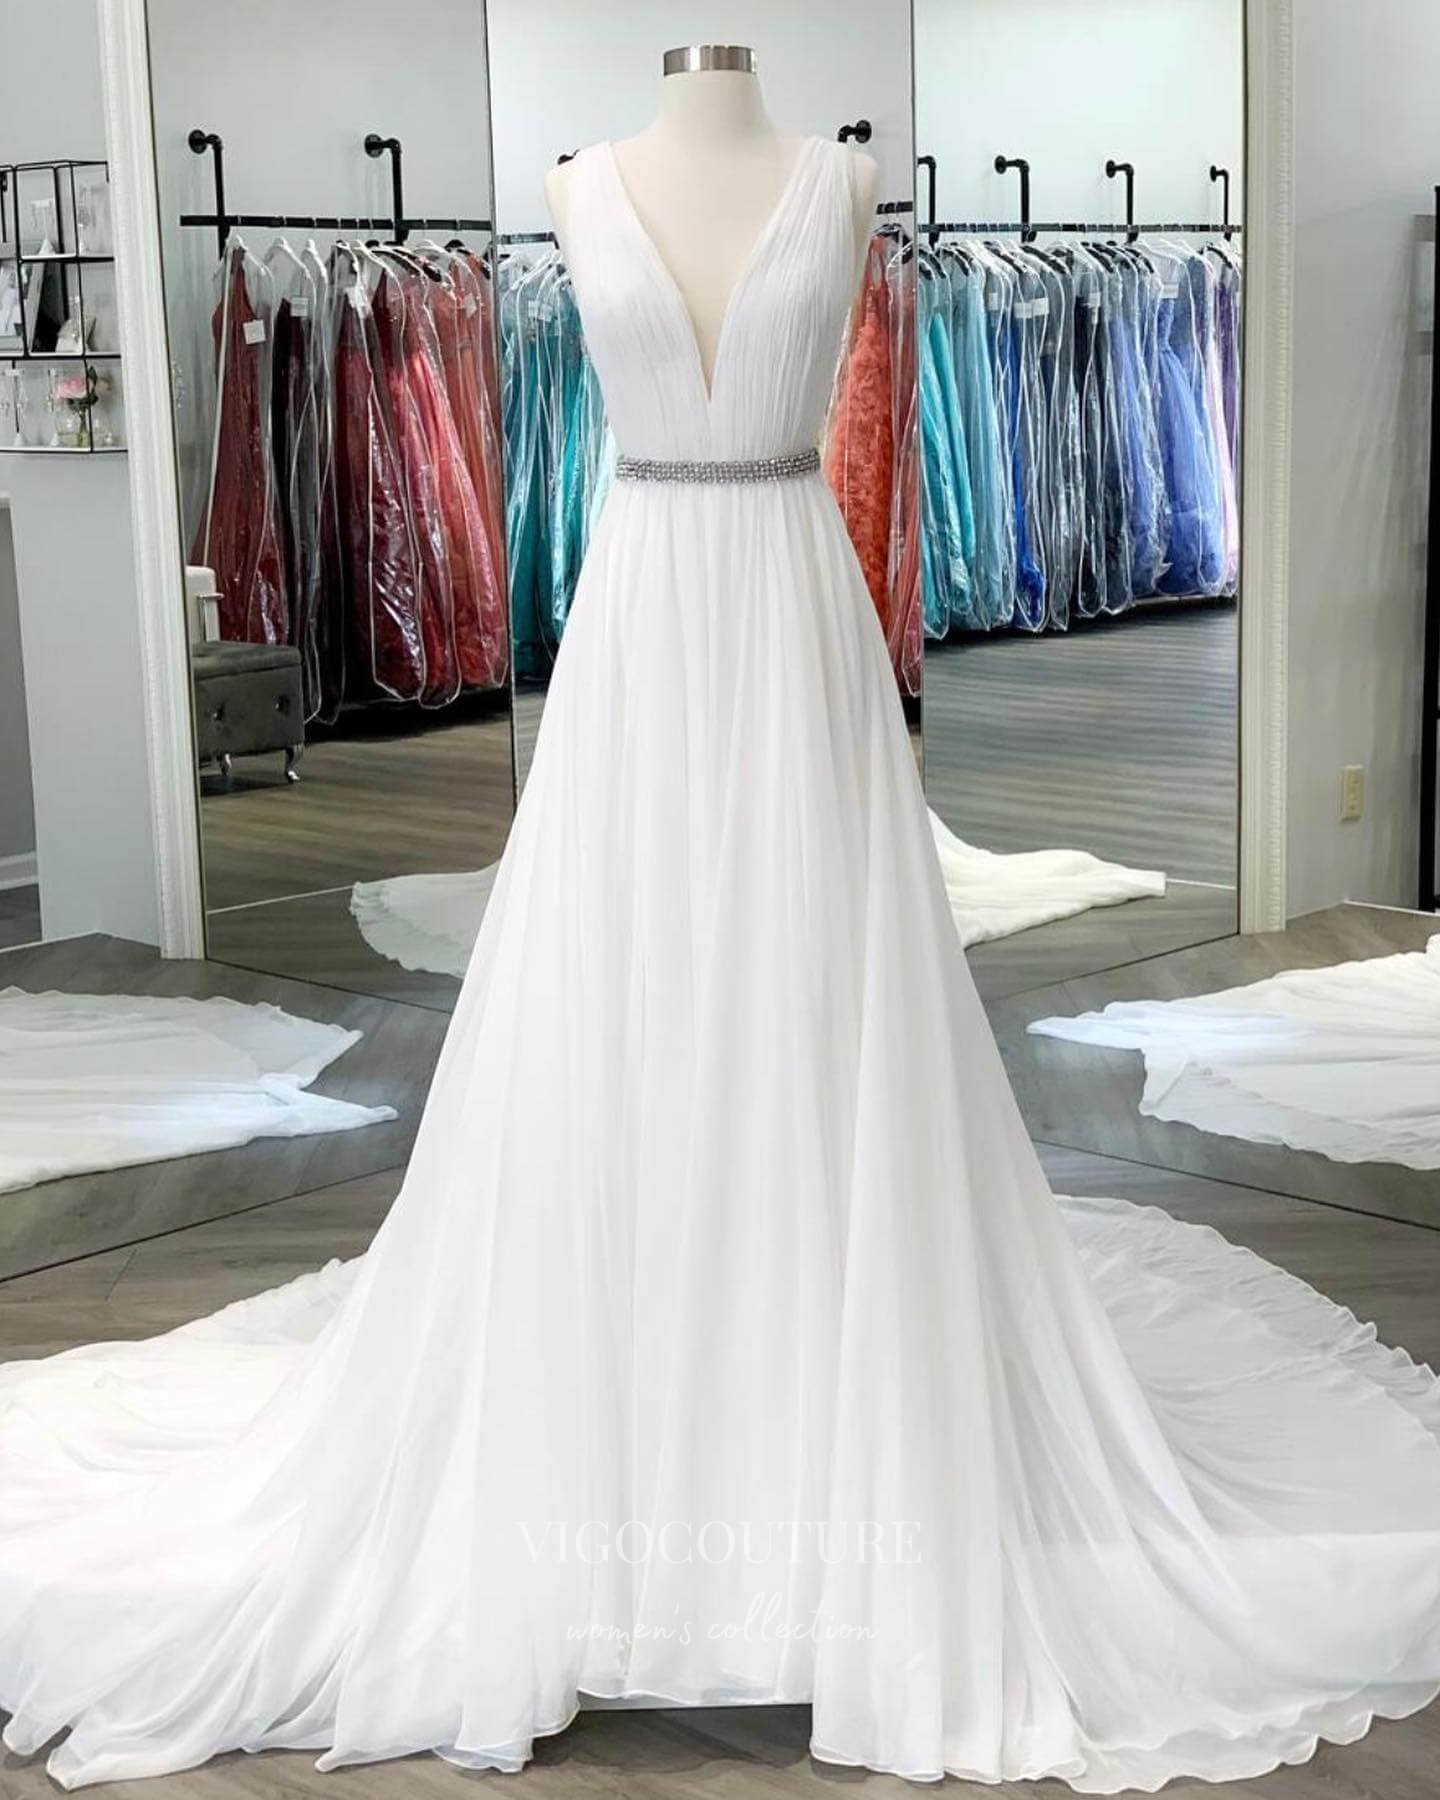 vigocouture-White Plunging V-Neck Prom Dresses Chiffon A-Line Evening Dress 21698-Prom Dresses-vigocouture-White-US2-